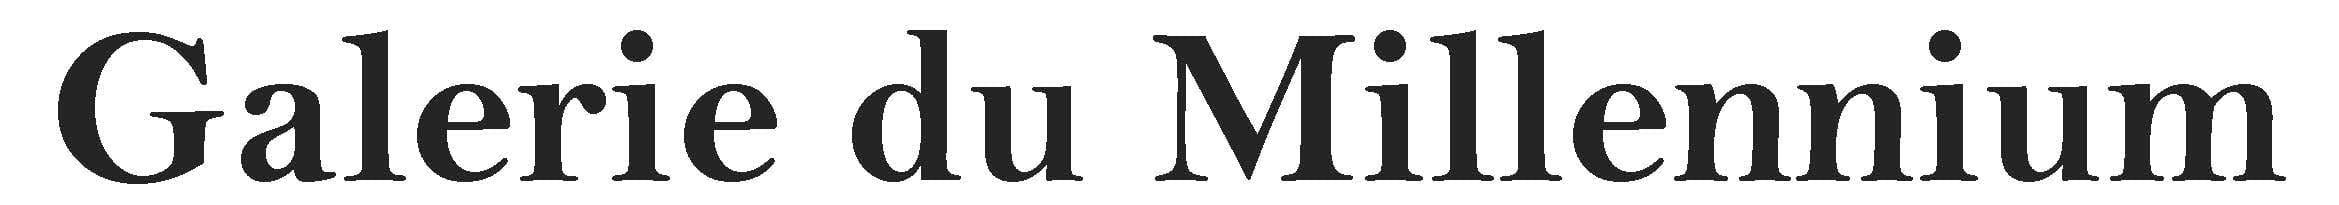 Galerie du Millennium company logo